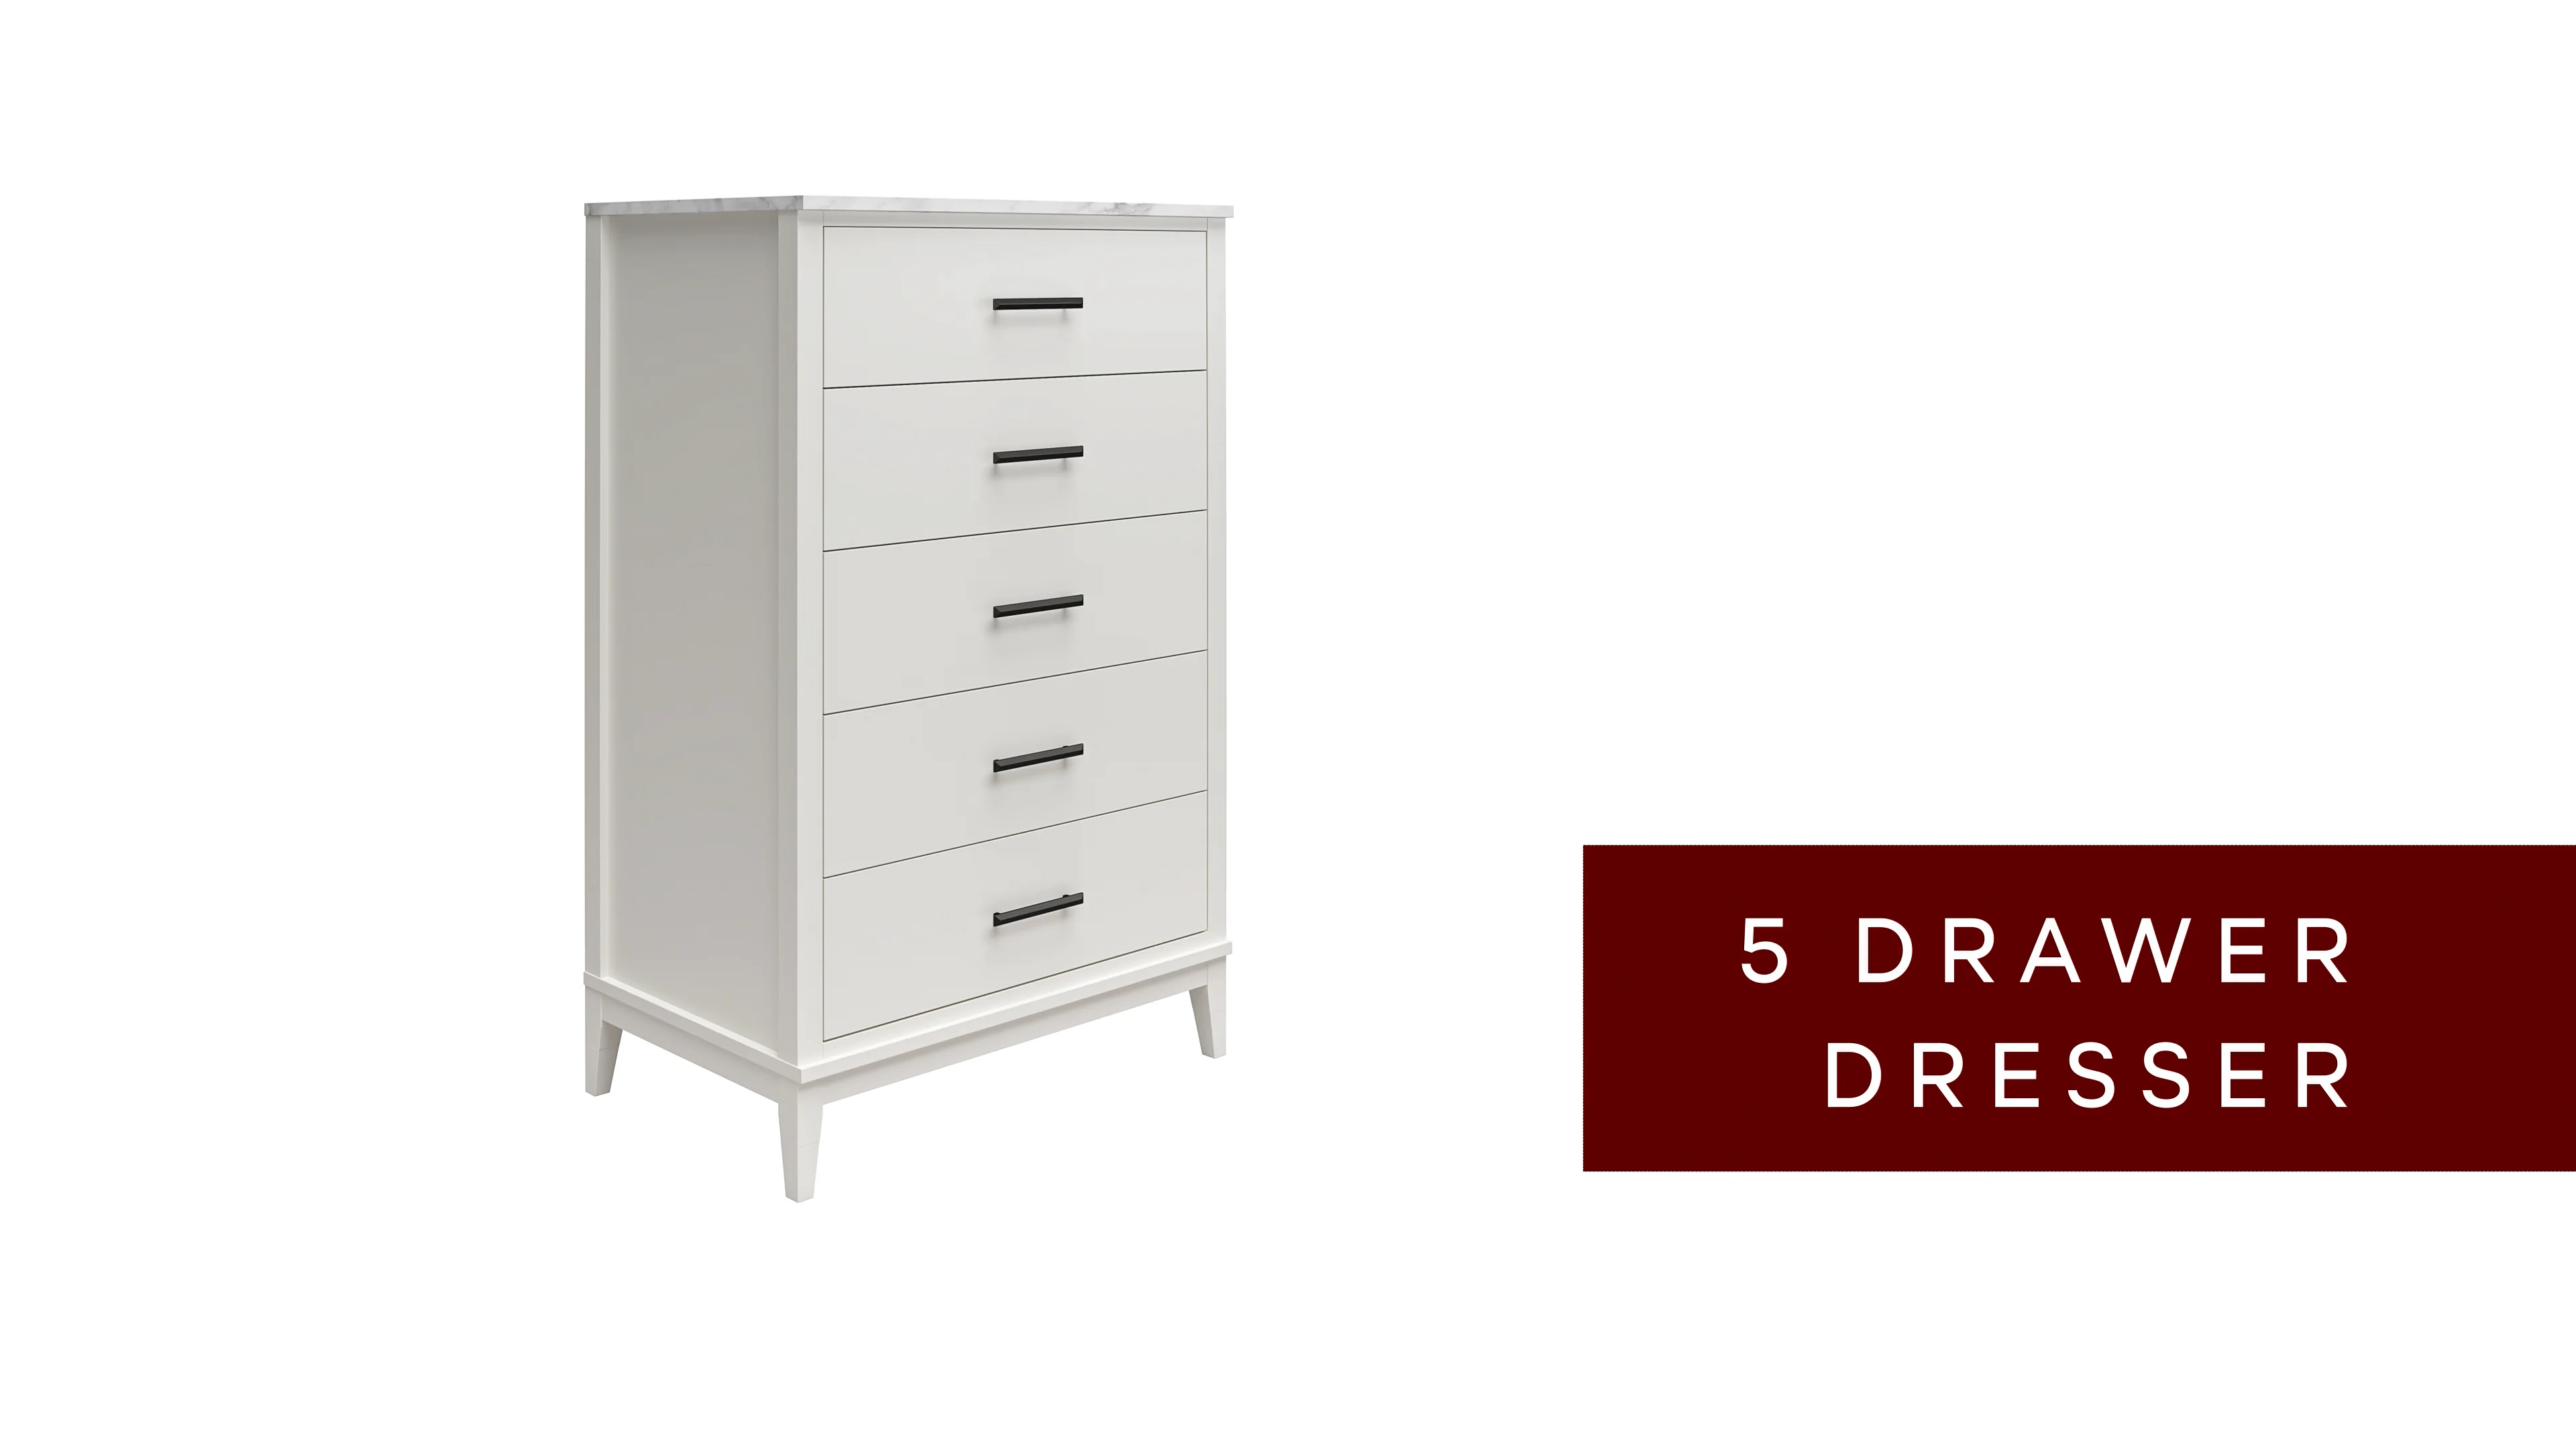 Target5 Drawer Dresser Feature Video on Vimeo